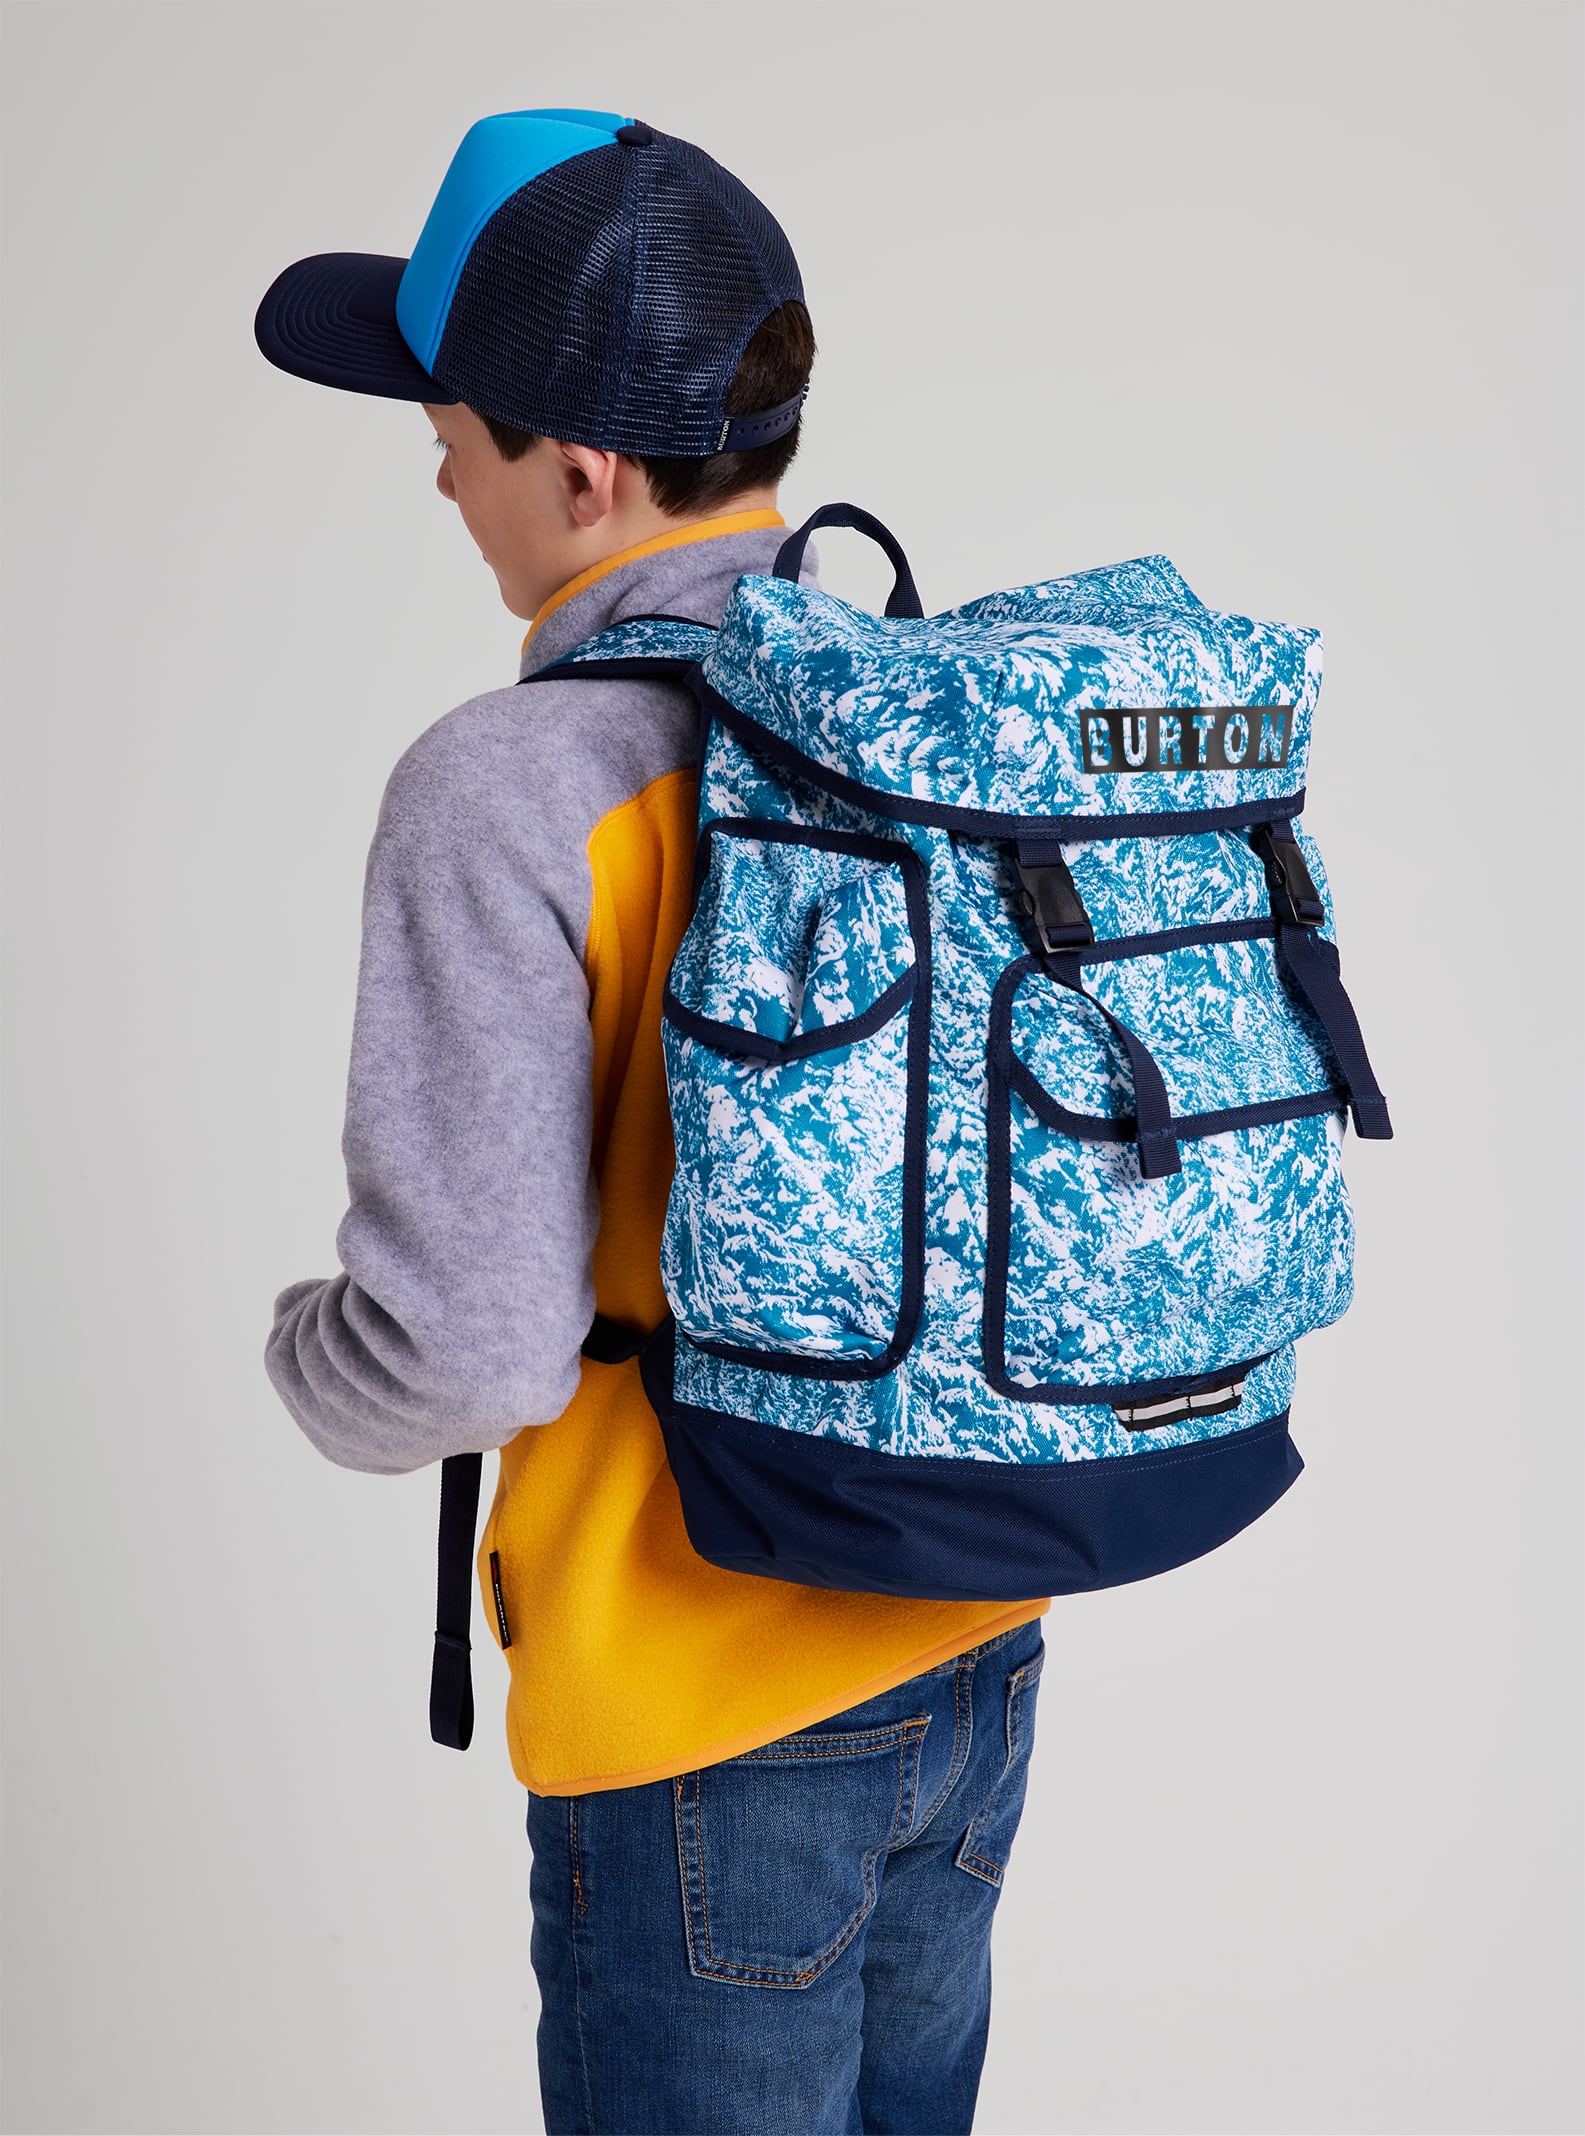 Kids Backpacks | Burton Snowboards US